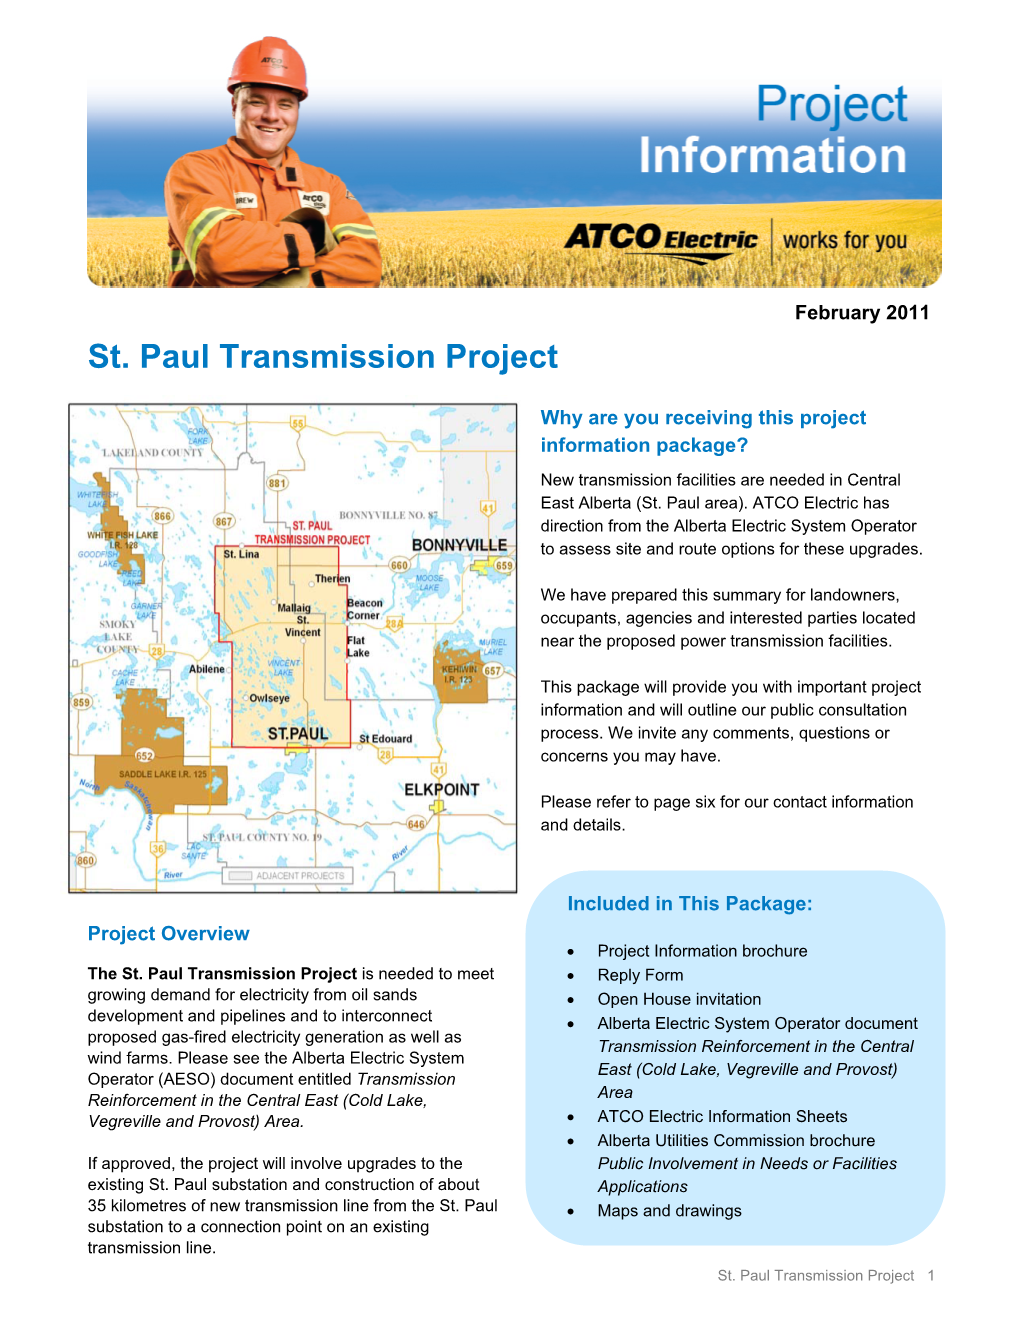 St. Paul Transmission Project